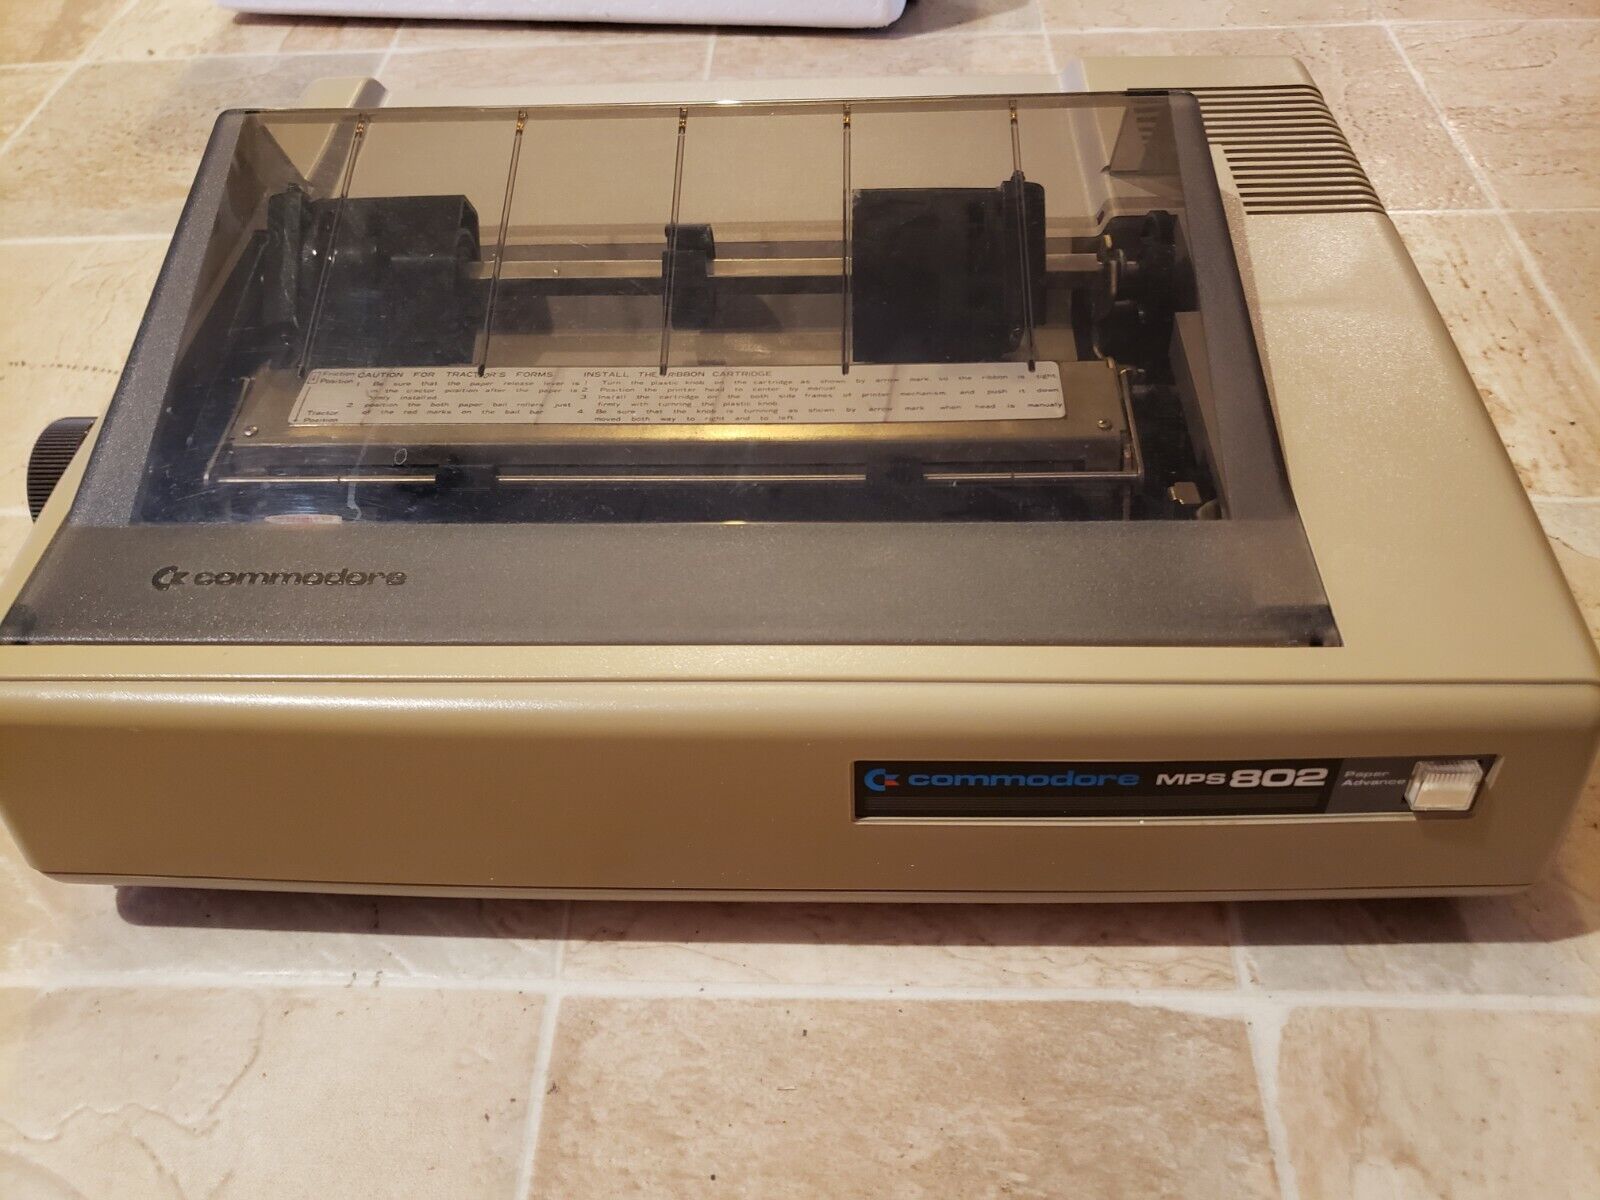 Printer Commodore Mps-802 Vintage for commodore 64 inOriginalBox Tested like new